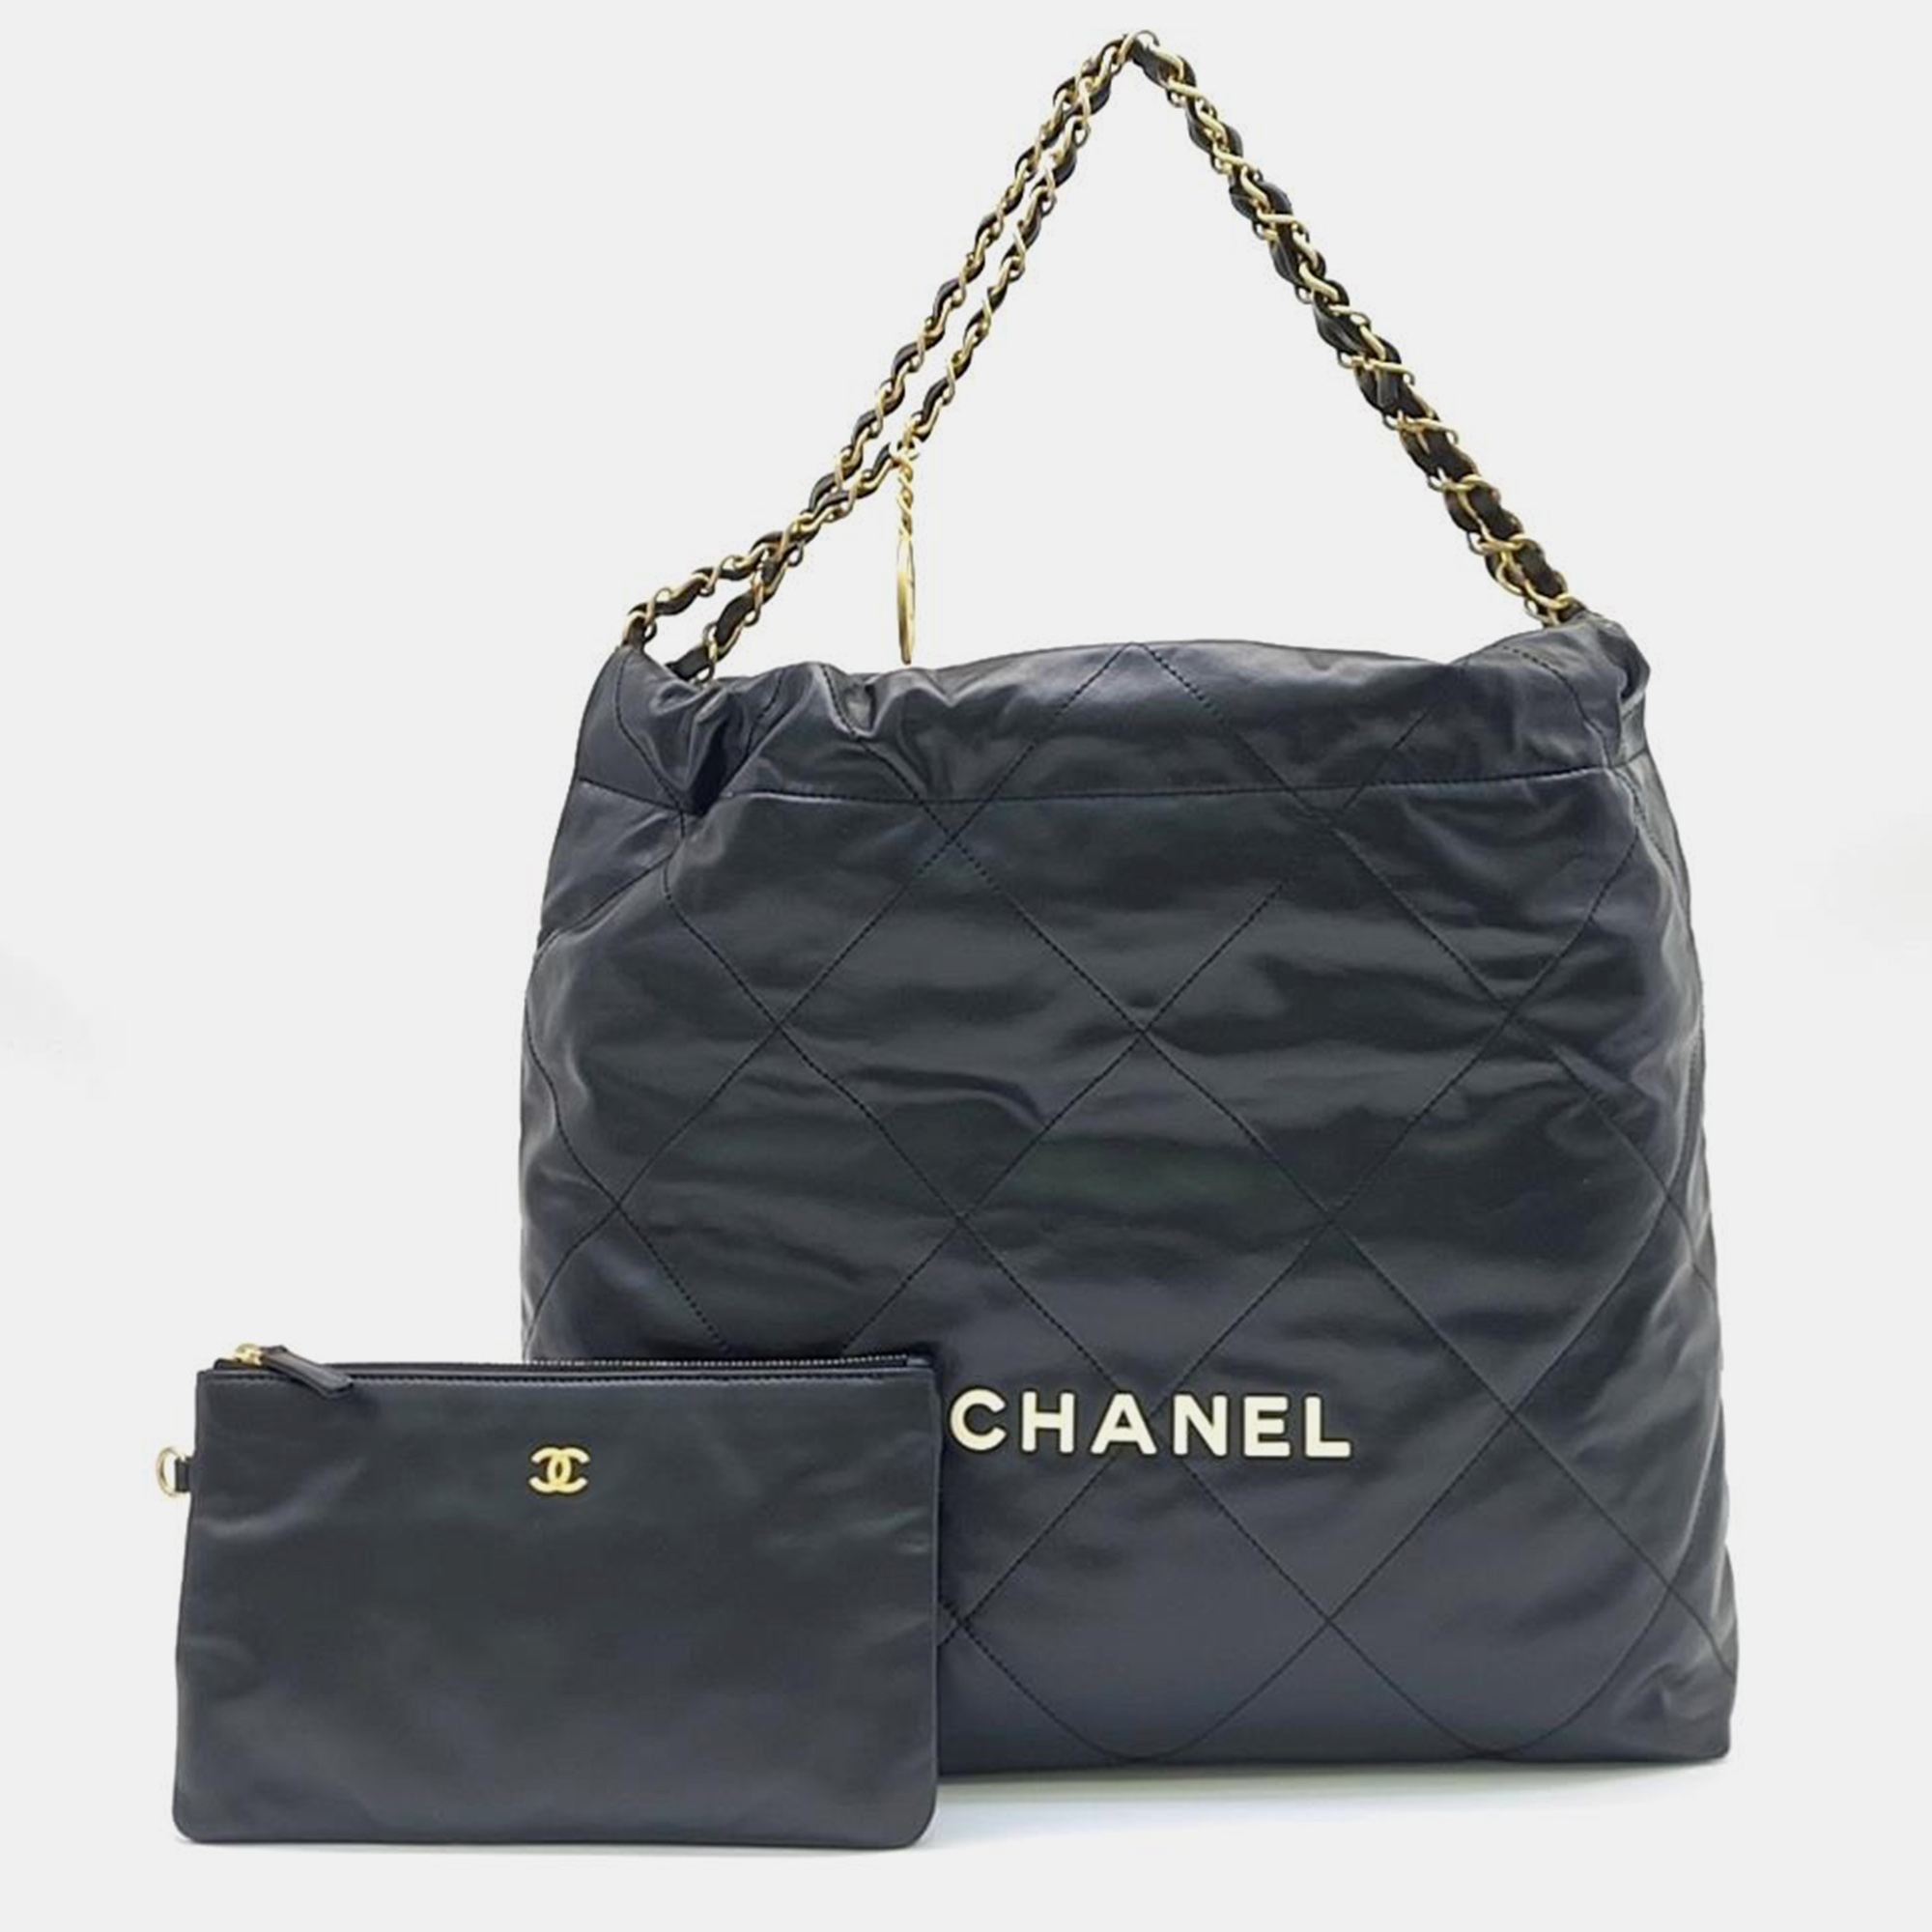 Chanel 22 medium crossbody bag